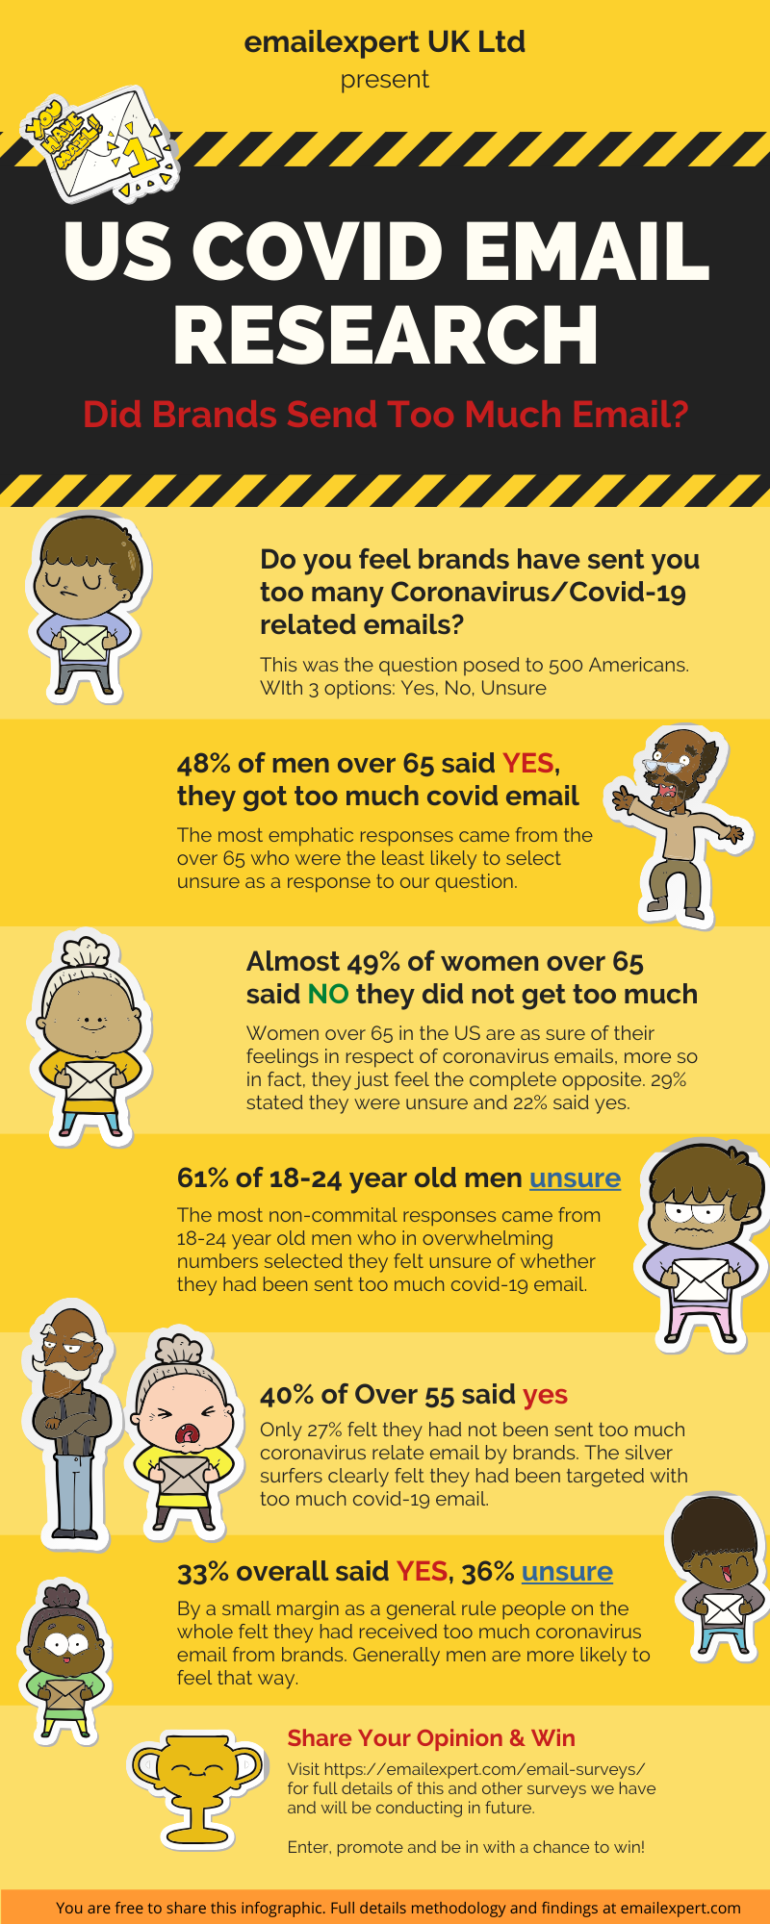 US Consumer Sentiment Survey in Respect of Coronavirus Email Messaging